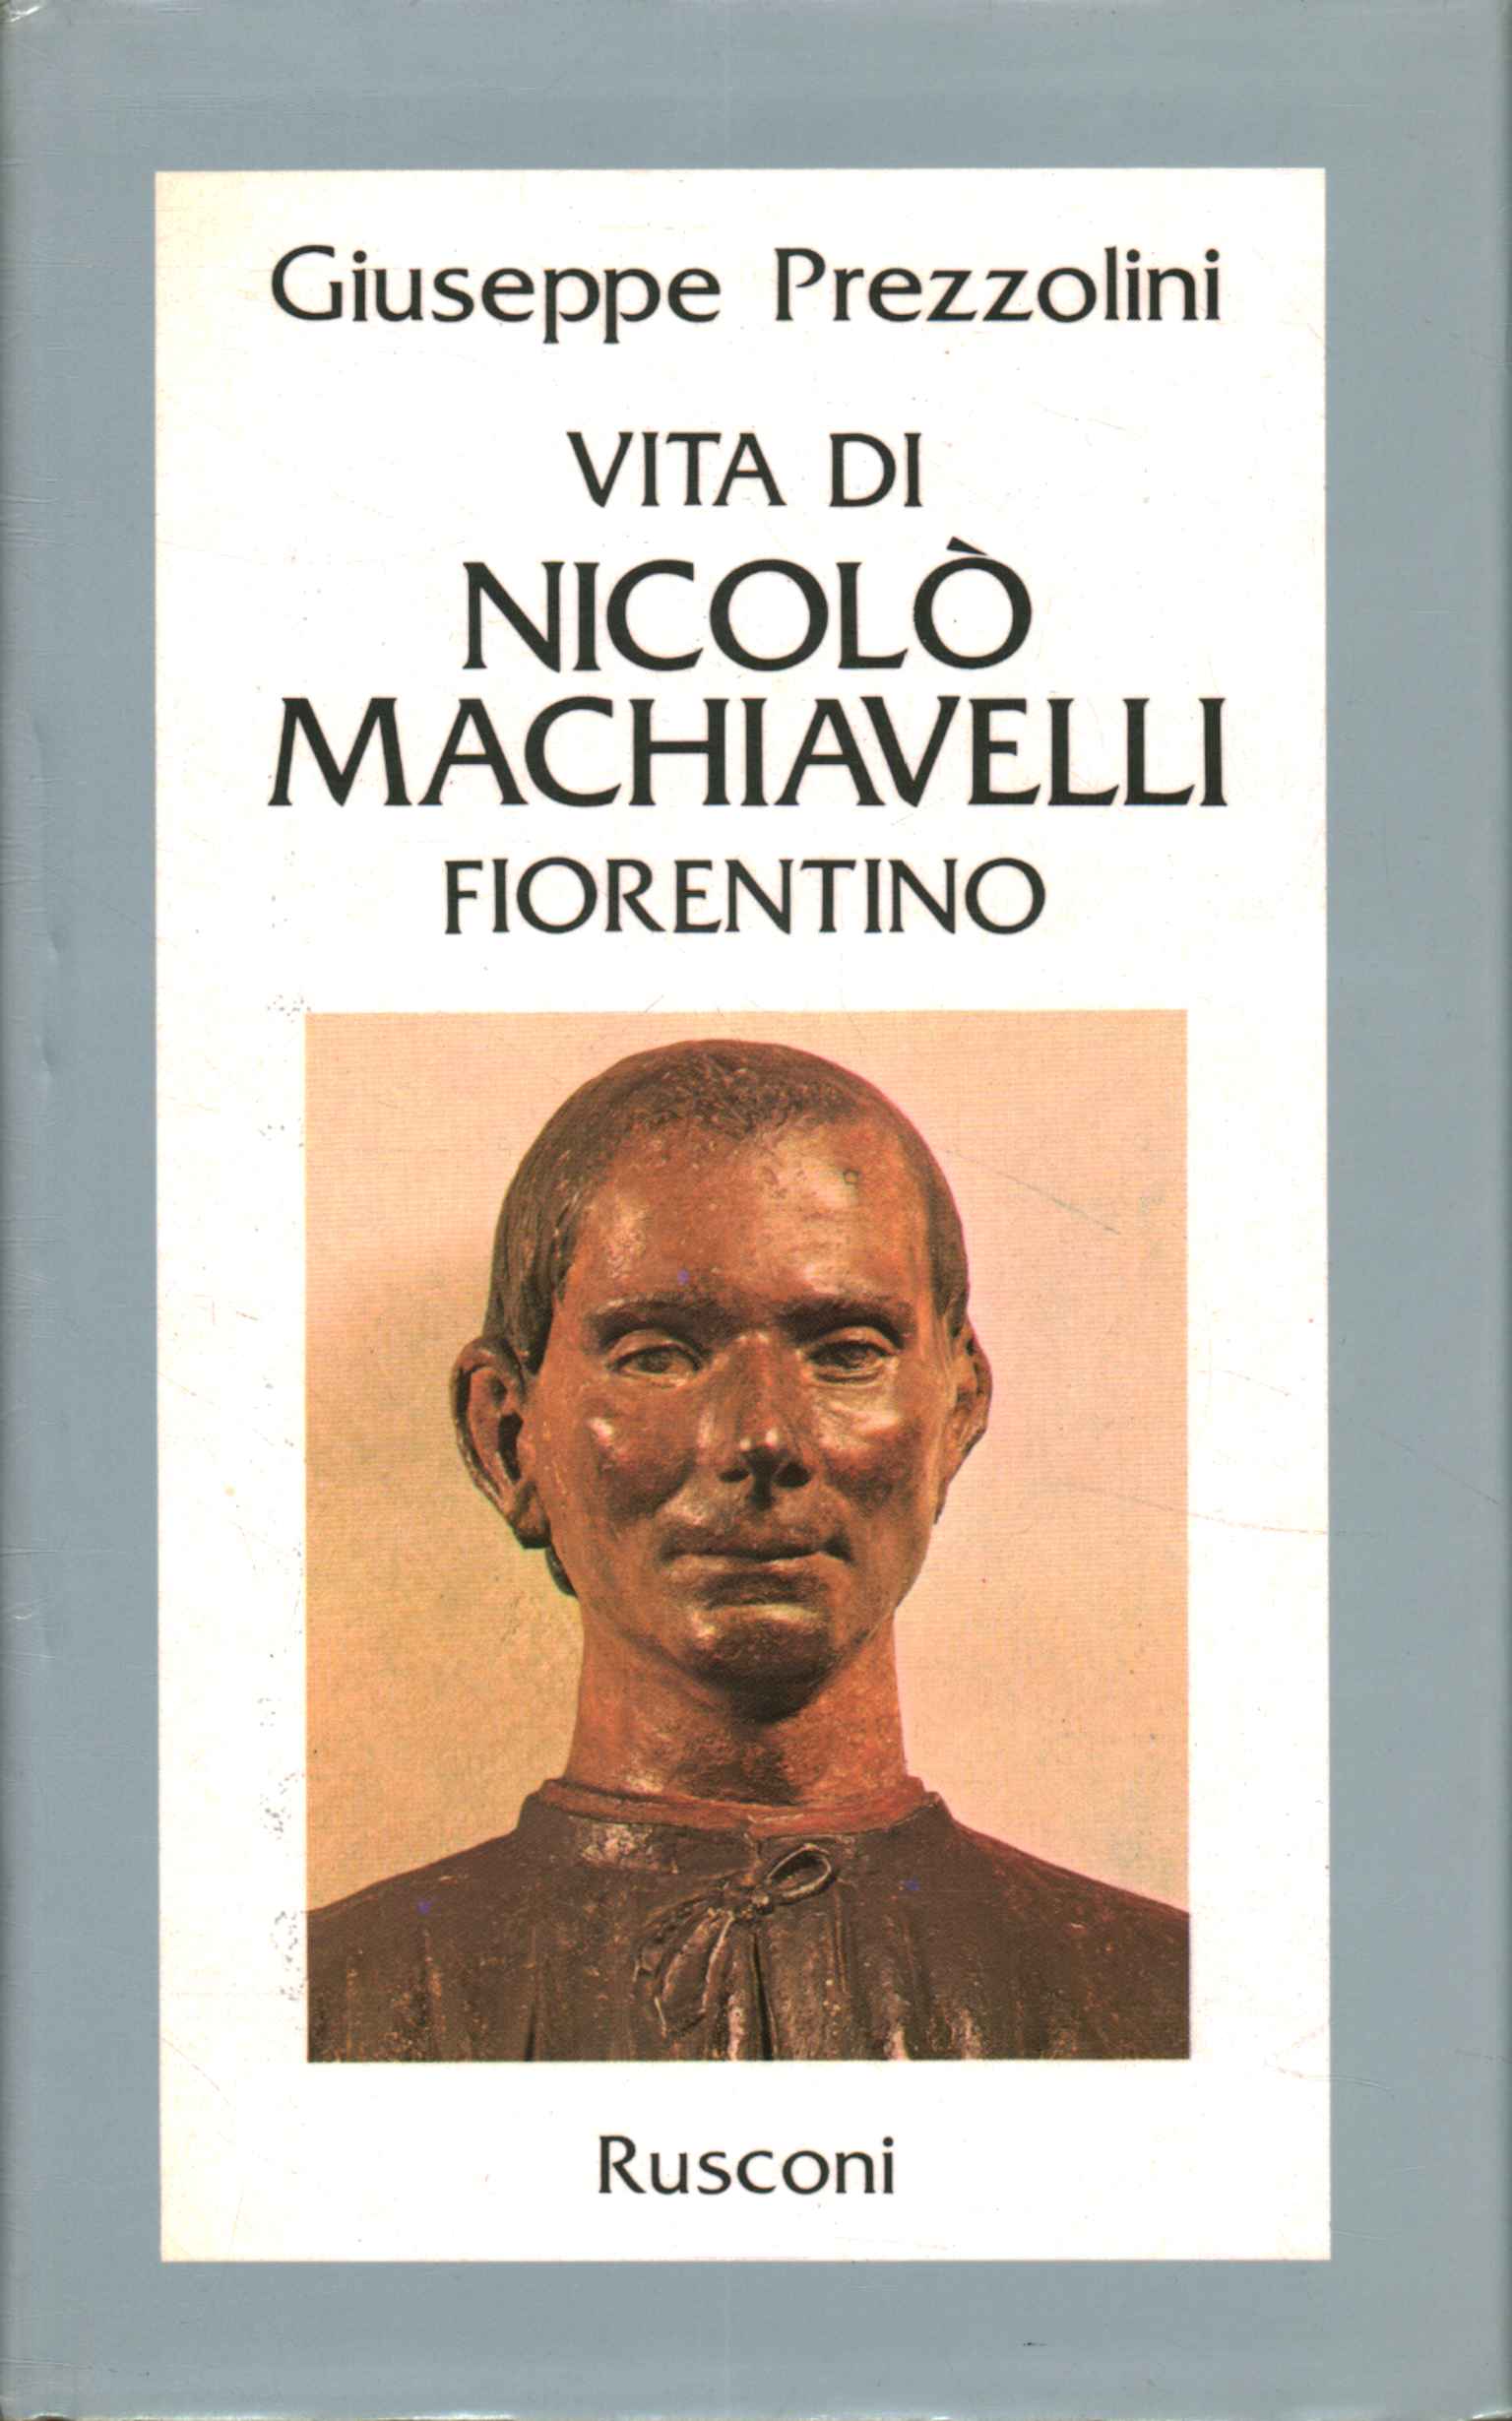 Life of Nicolò Macchiavelli Fiorentin